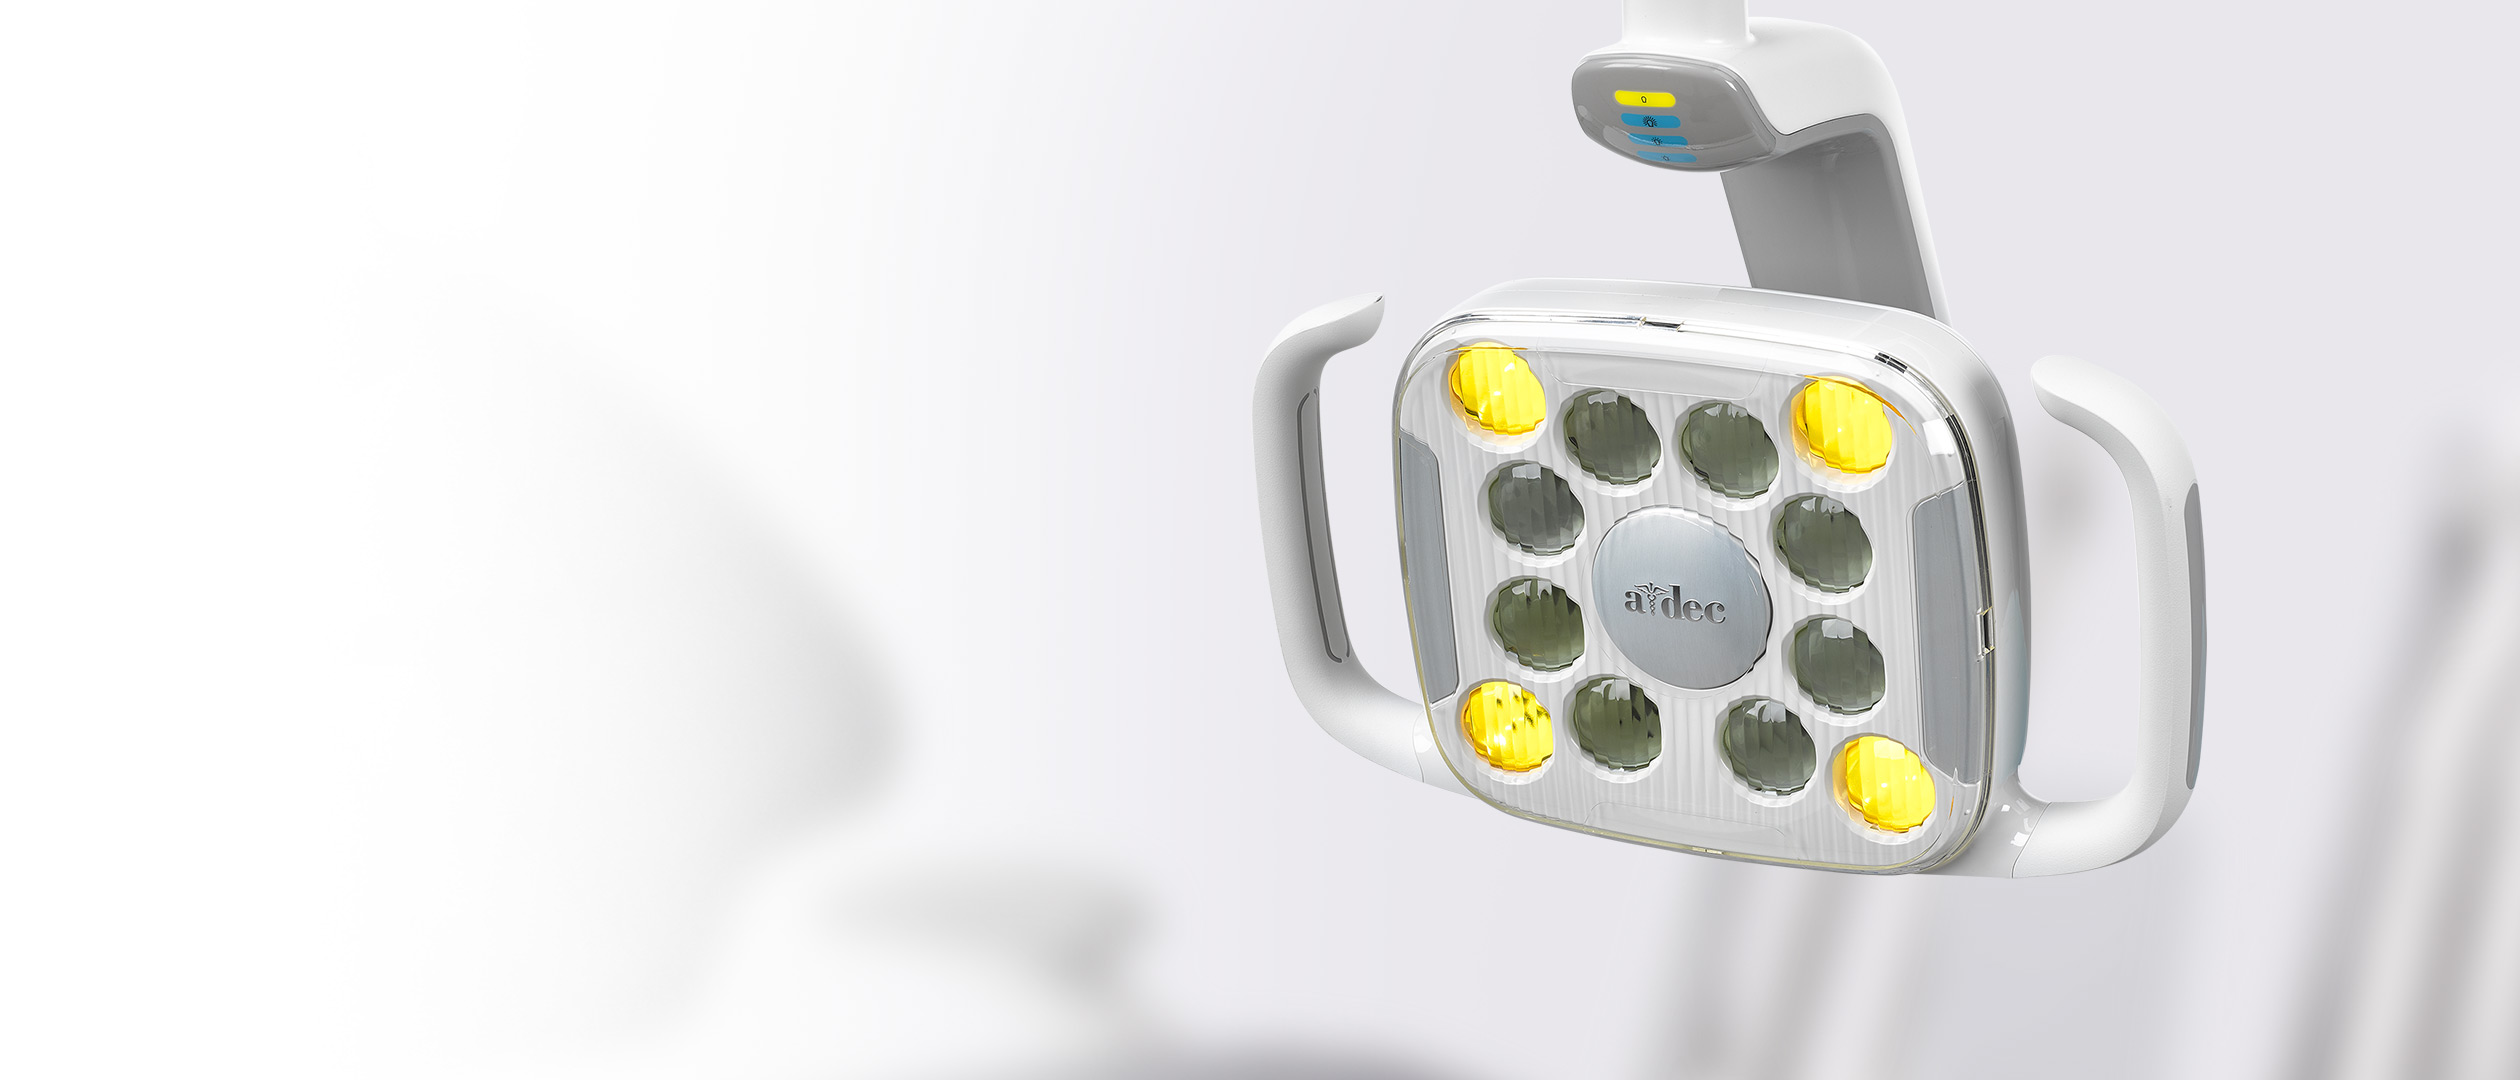 A-dec 500 LED dental light in operatory